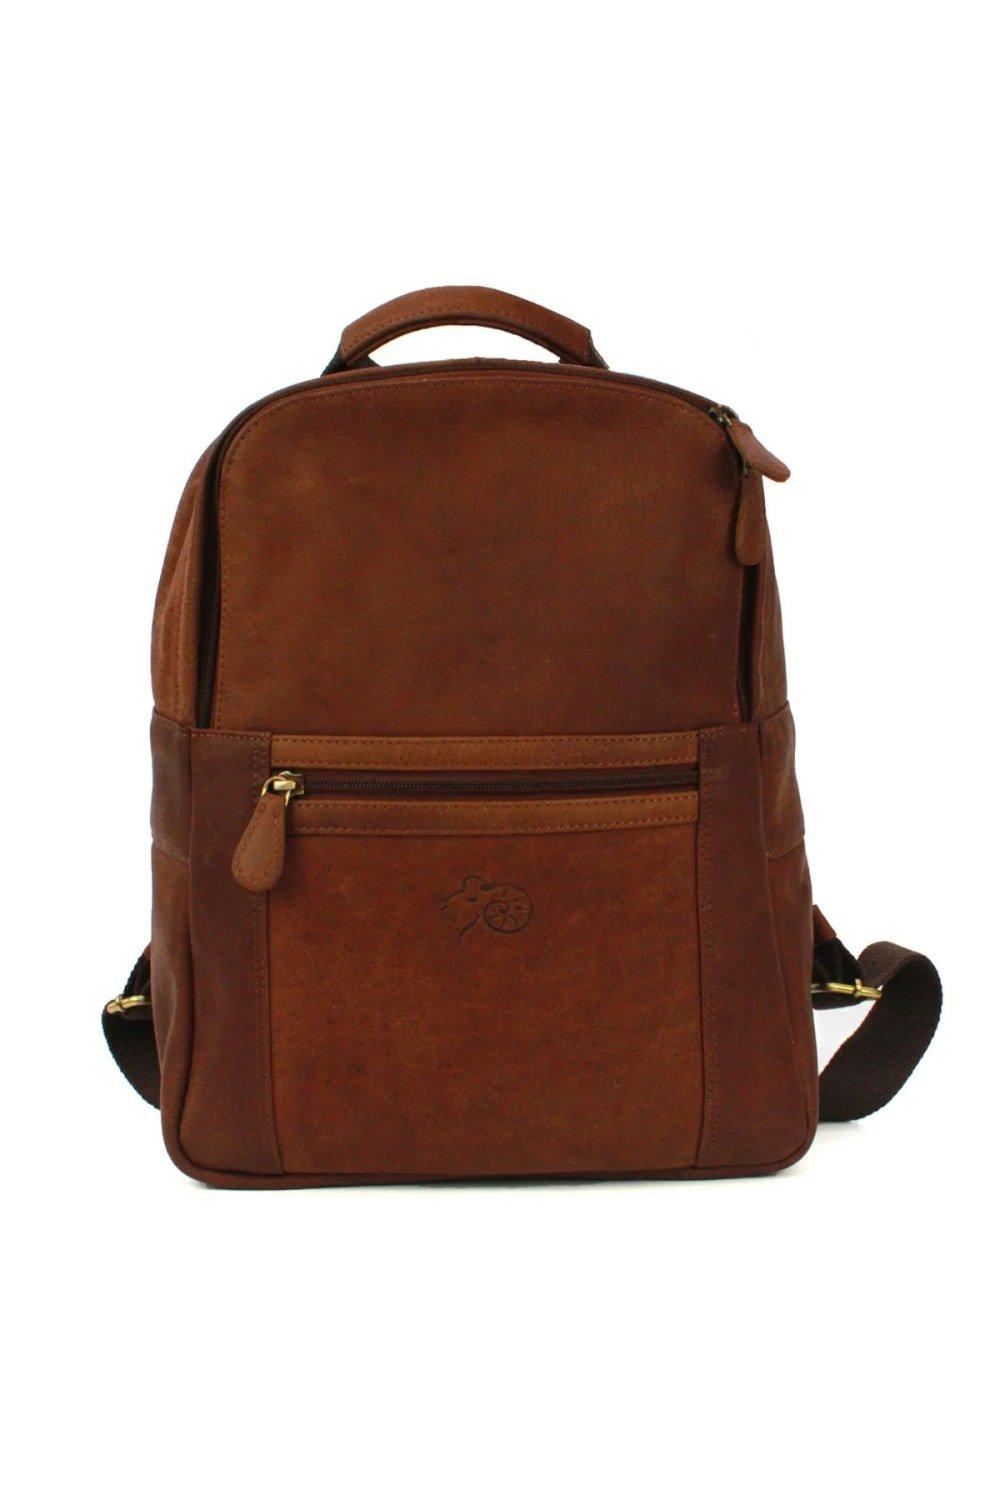 Кожаный рюкзак Ross с потертостями Eastern Counties Leather, коричневый кожаный рюкзак ross с потертостями eastern counties leather коричневый